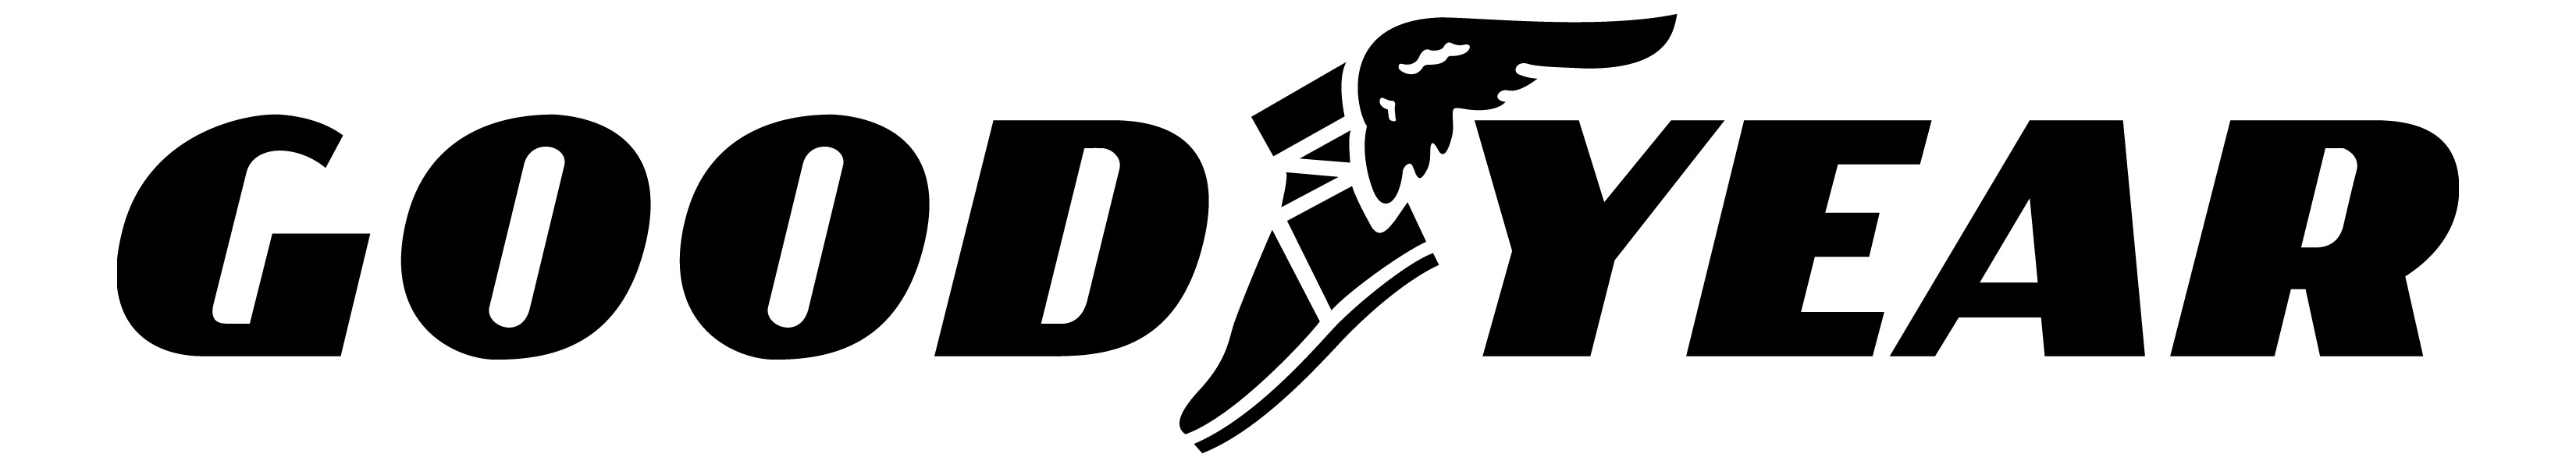 Goodyear Logo Wallpaper